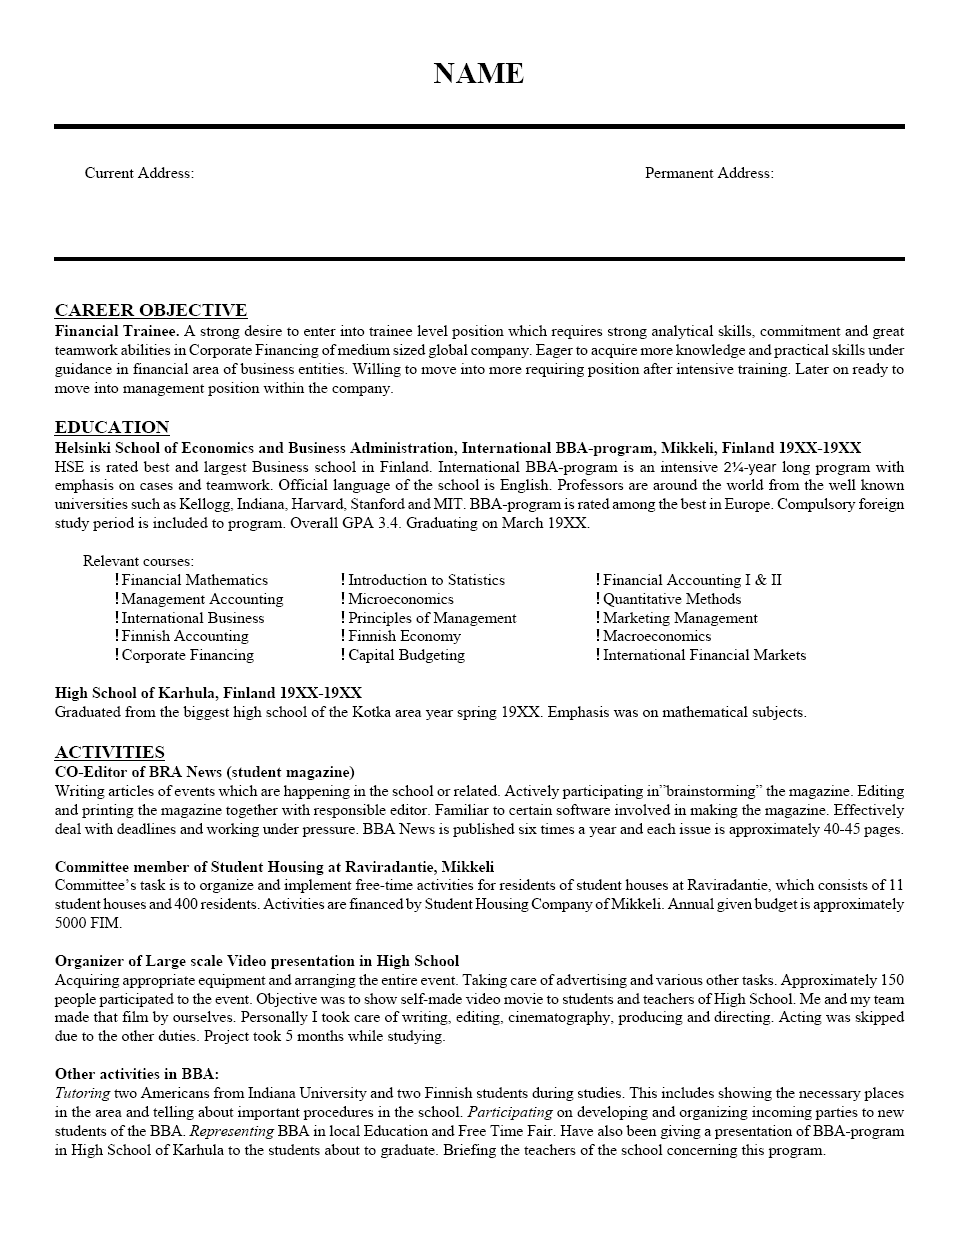 Resume Format Education 